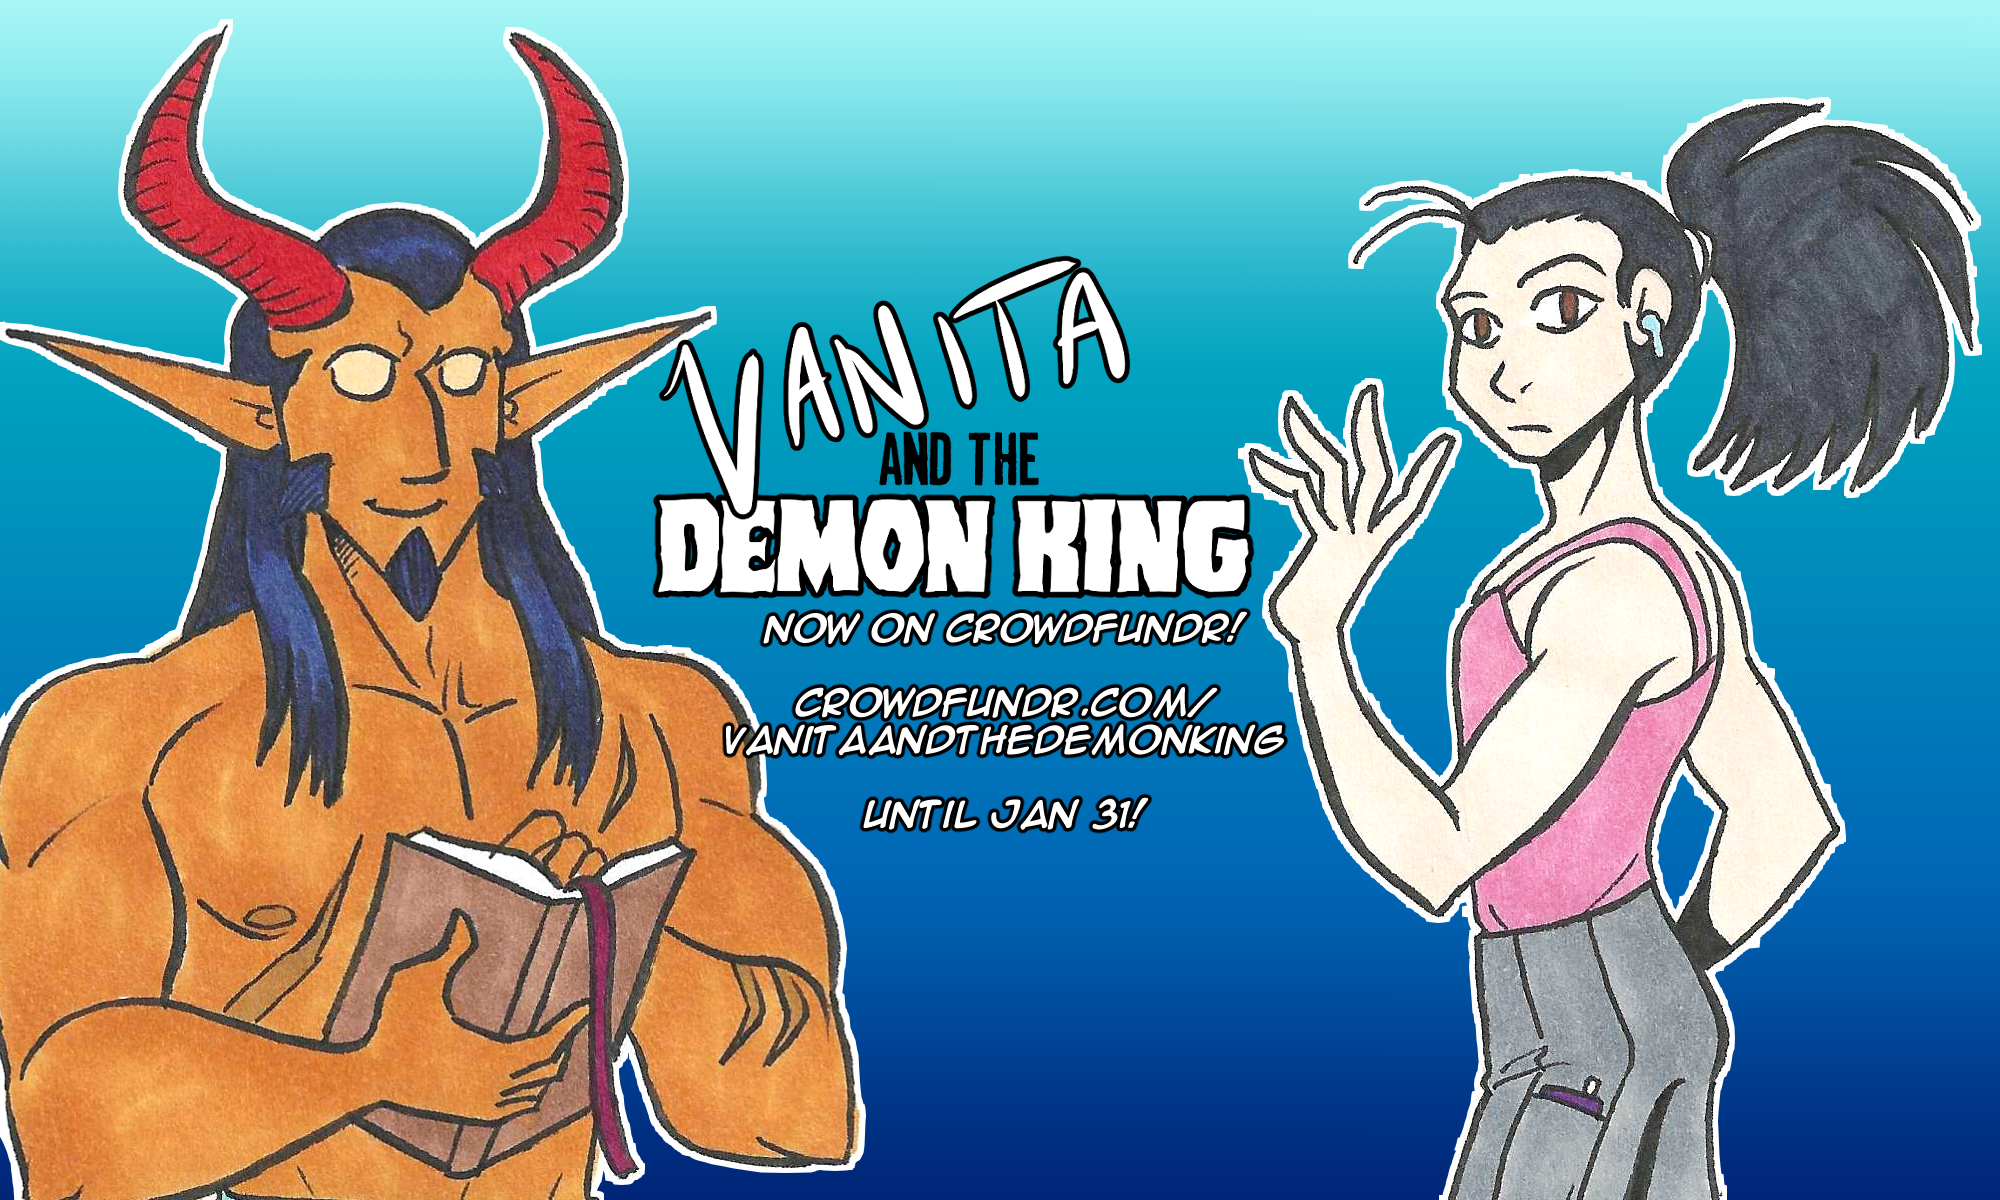 vanita and the demon king is now on crowdfundr! crowdfundr.com/vanitaandthedemonking